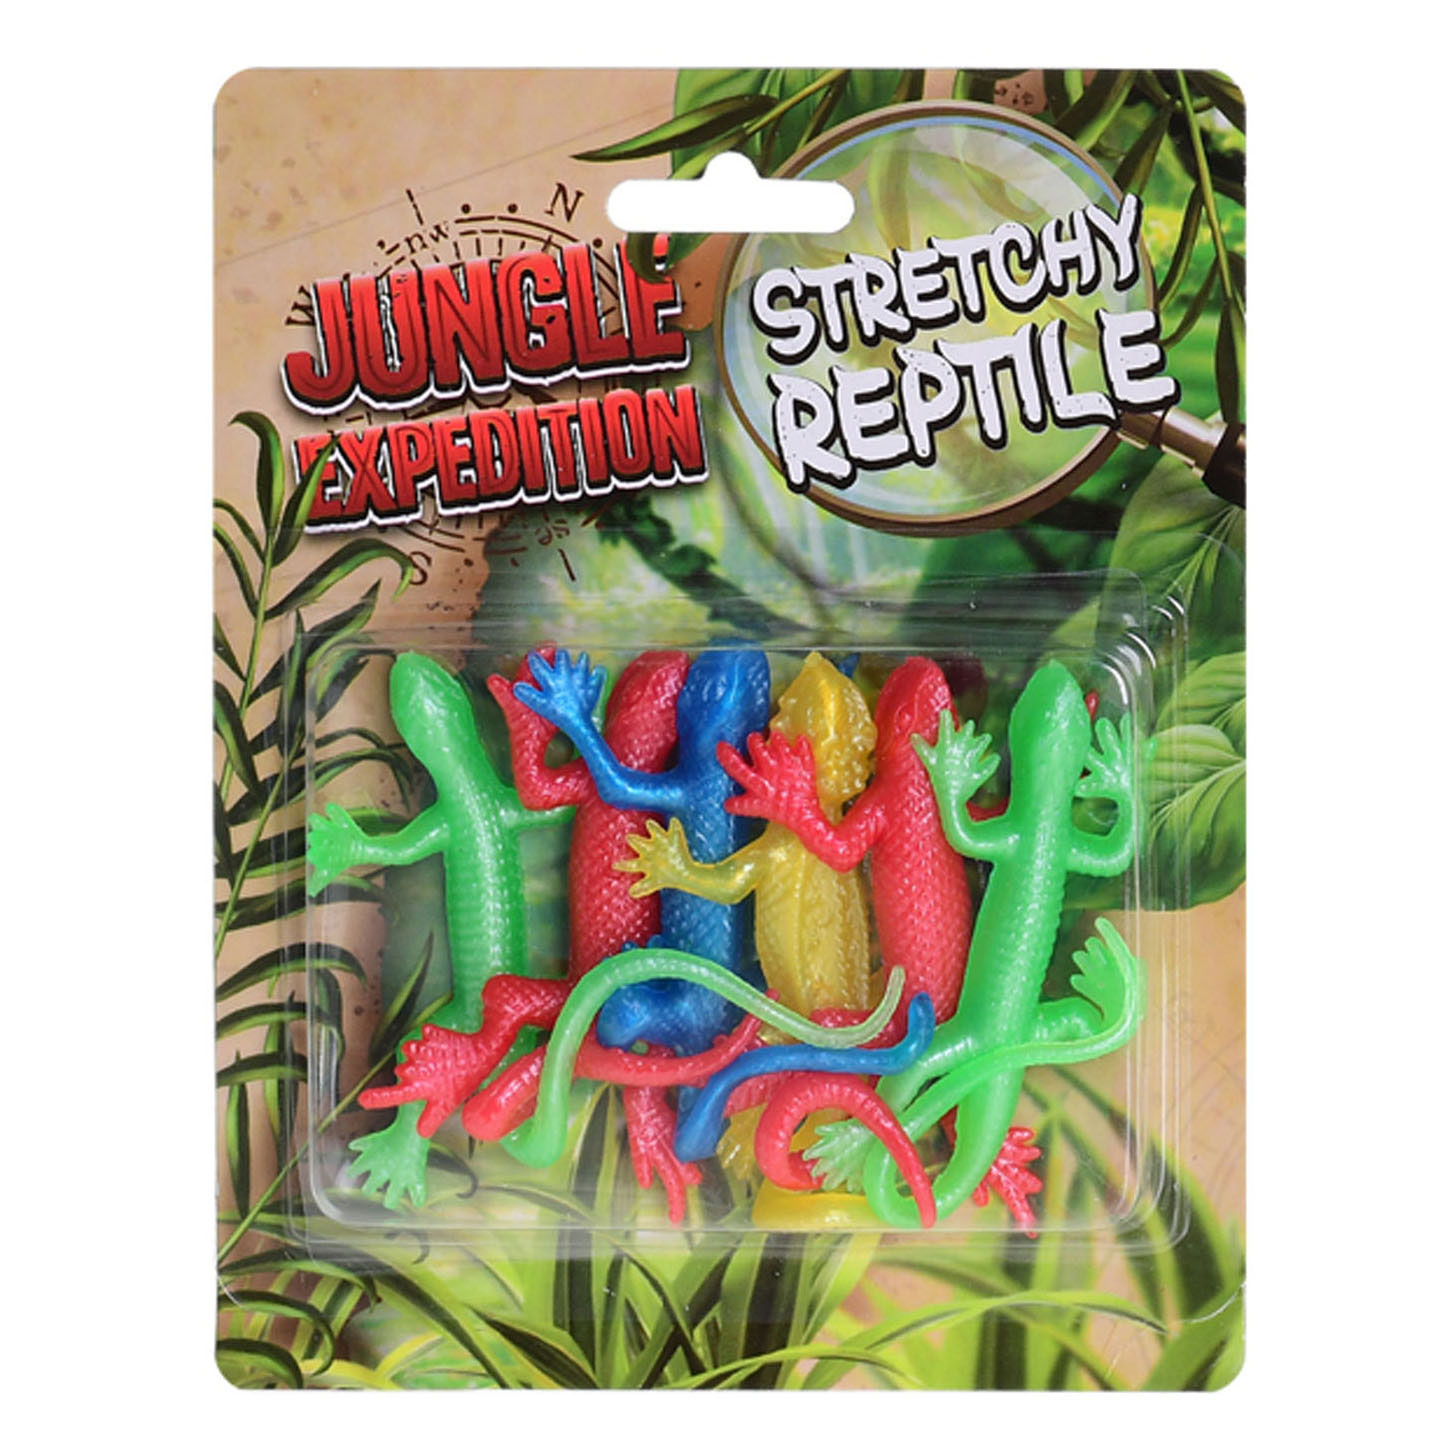 Jungle Expedition Stretch Reptilien. 6 Stk.